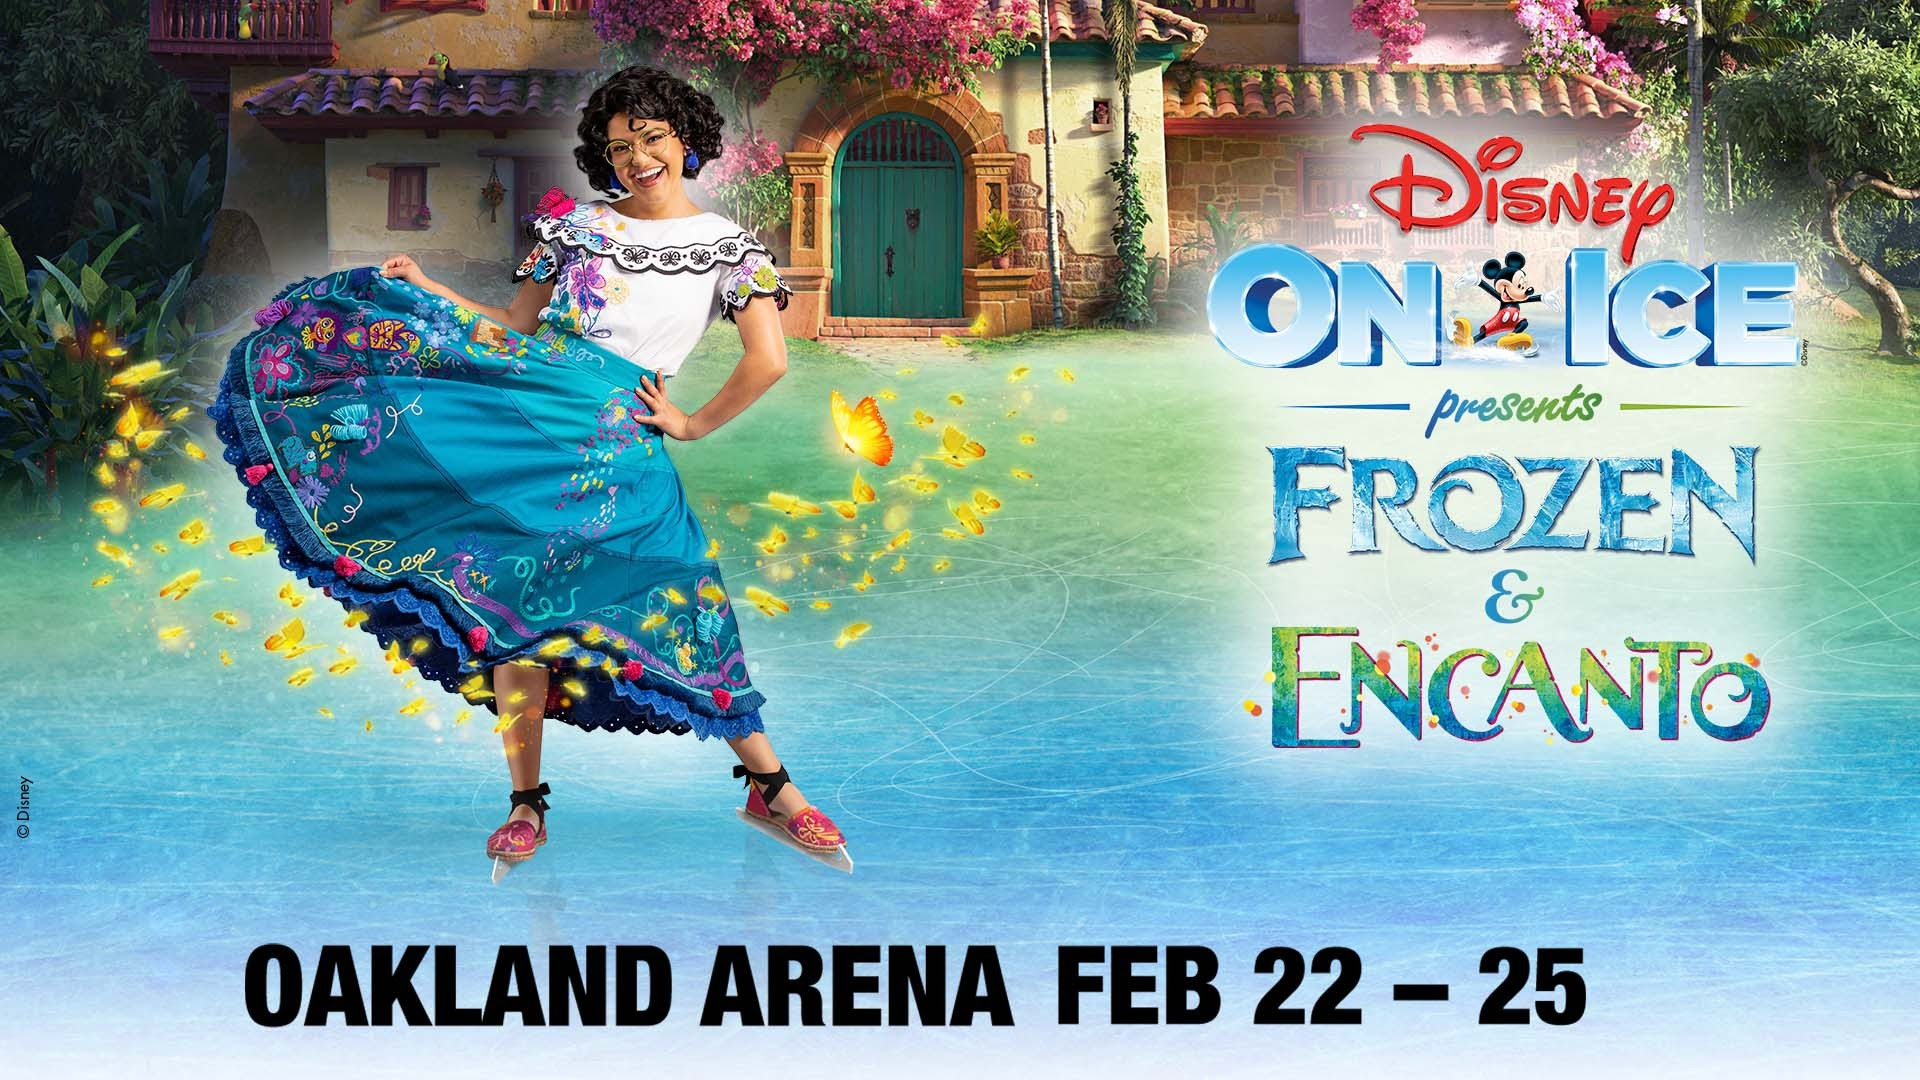 Disney On Ice presents Frozen & Encanto at Oakland Arena Oakland